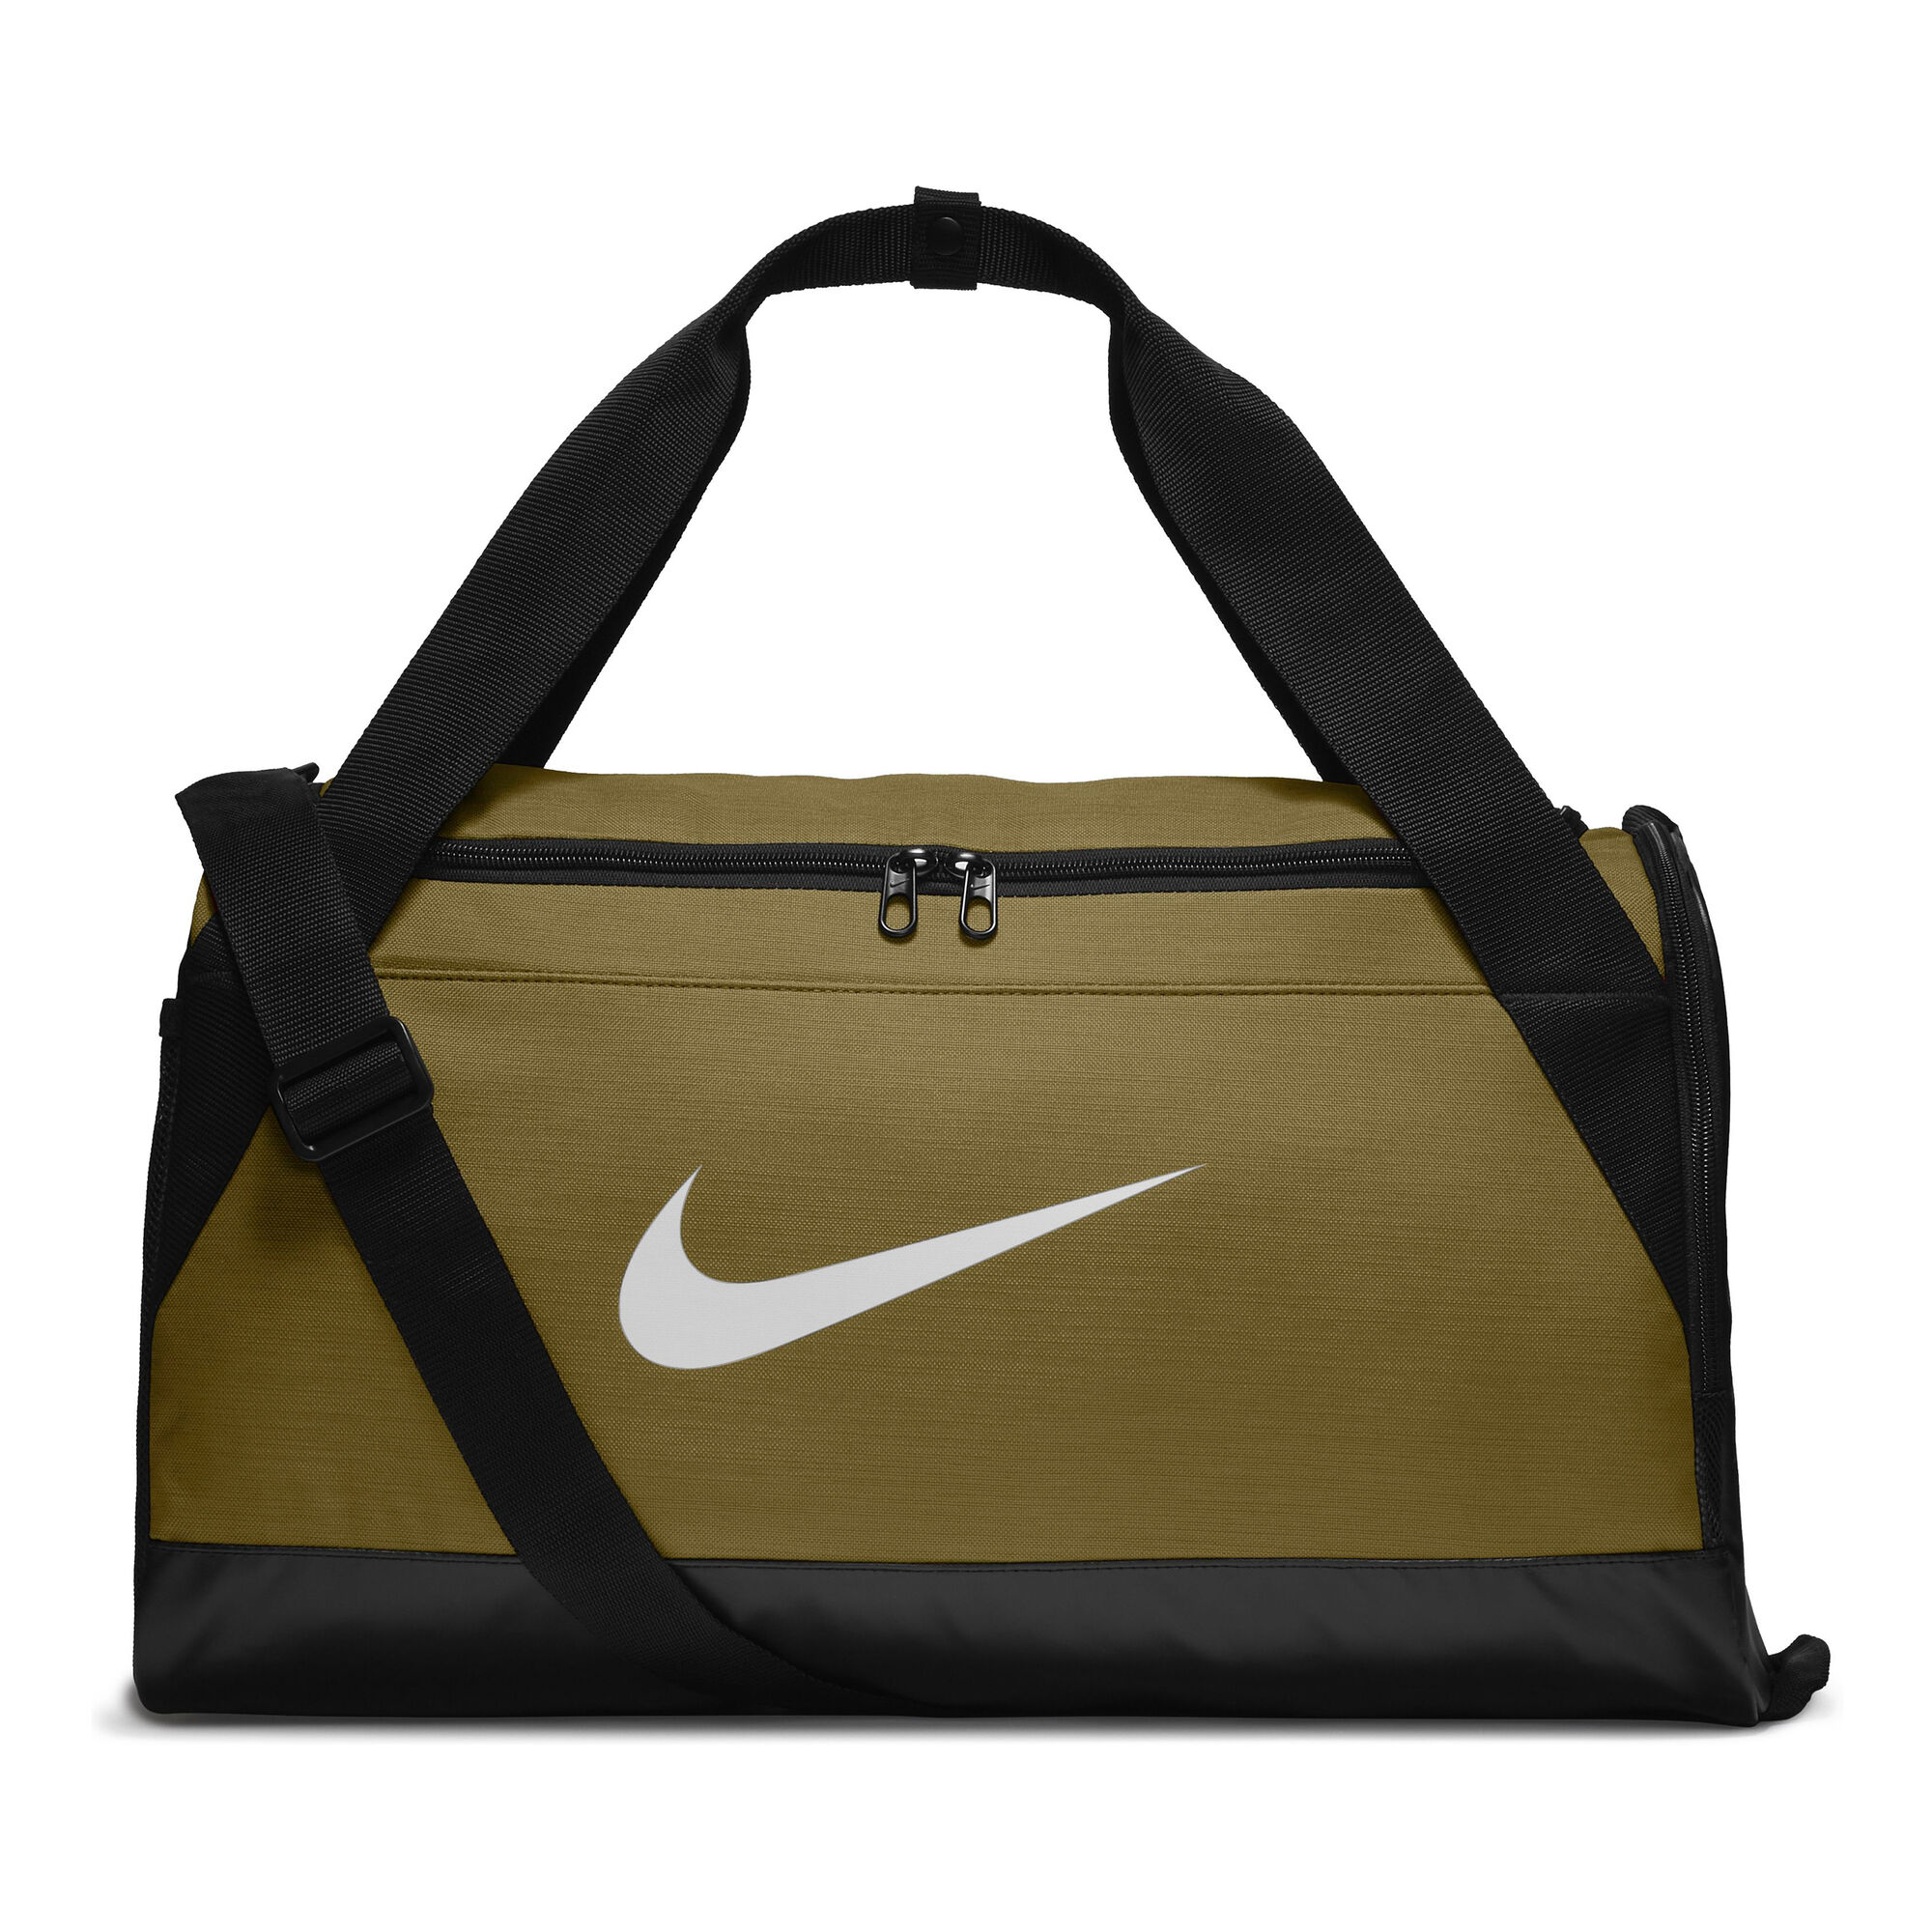 Buy Nike Brasilia Duffel Small Sports Bag Olive, Black online